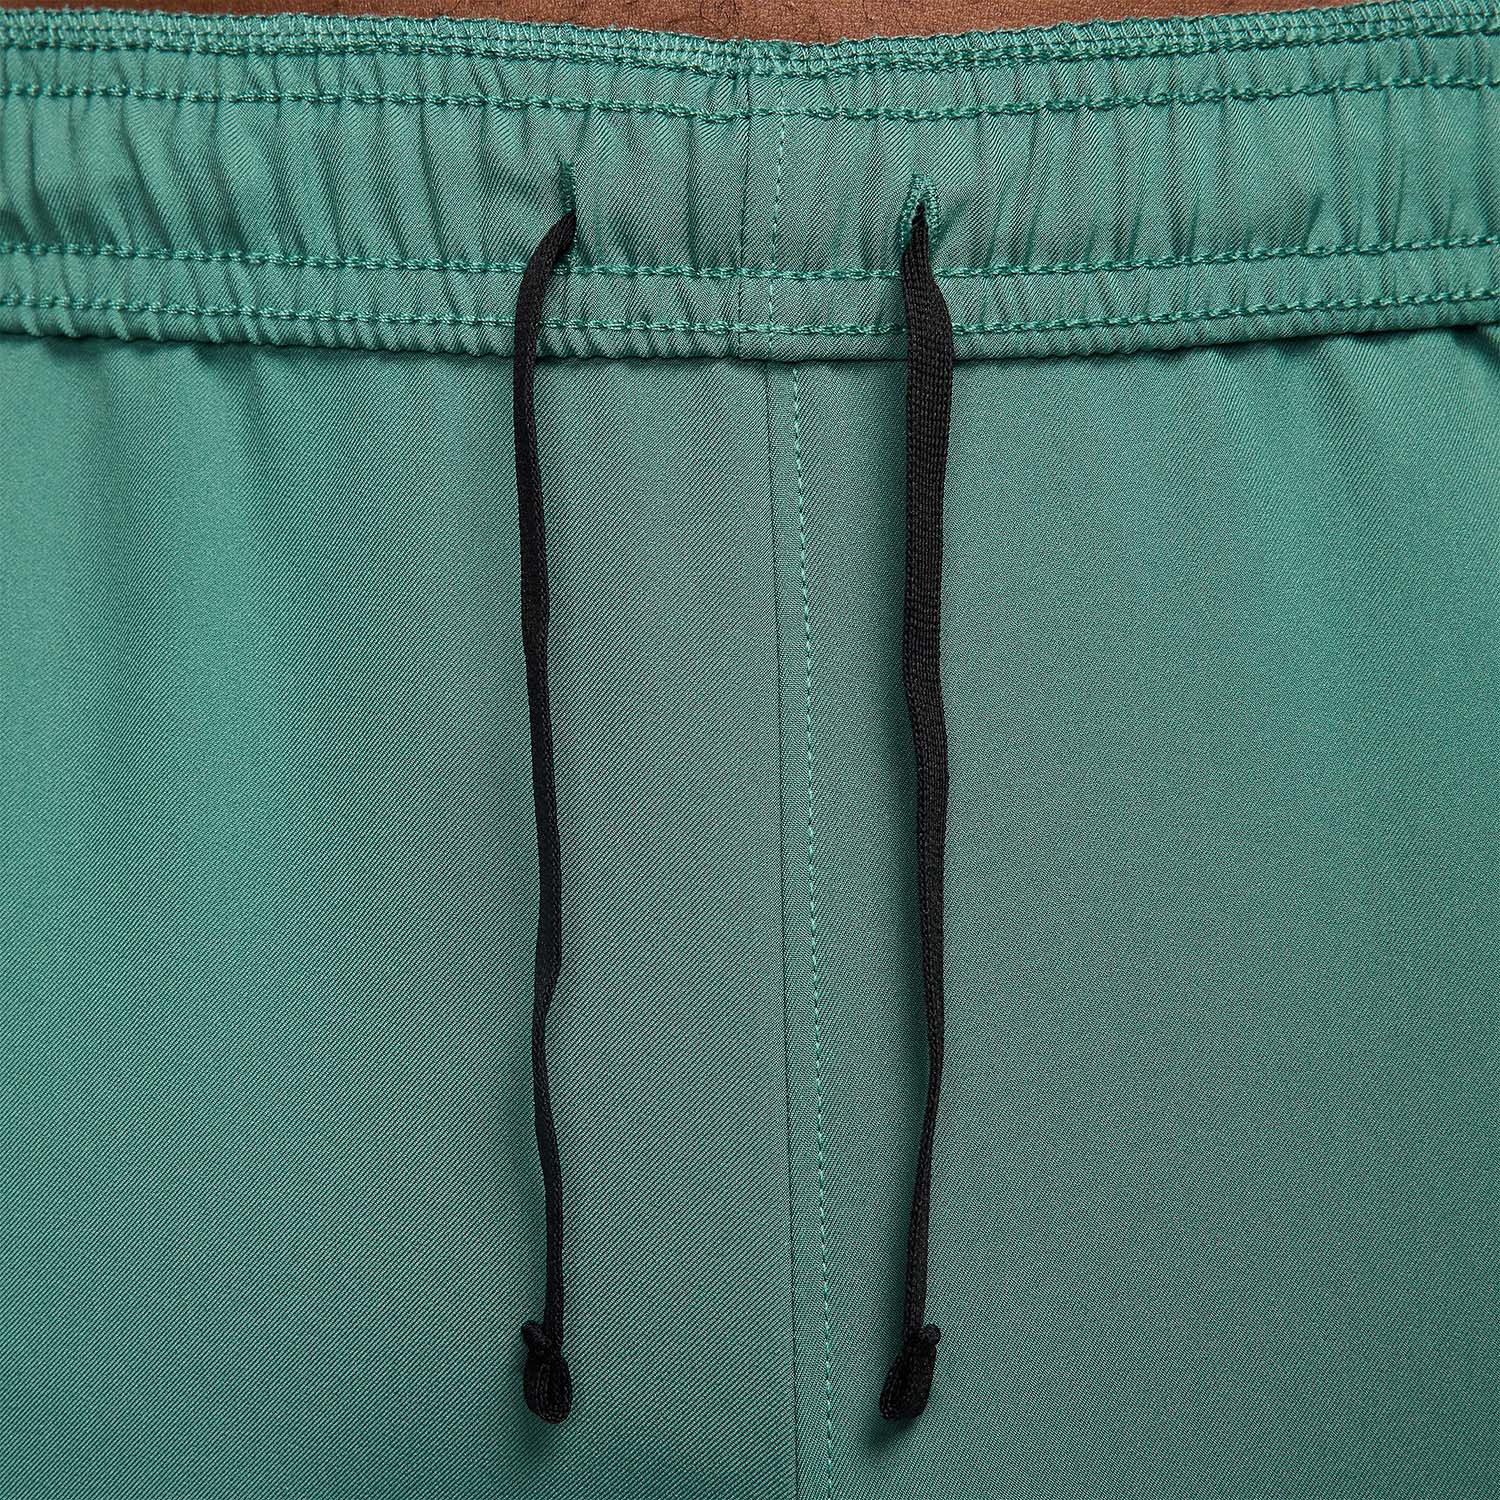 Nike Challenger Flash Pants - Bicoastal/Reflective Silver